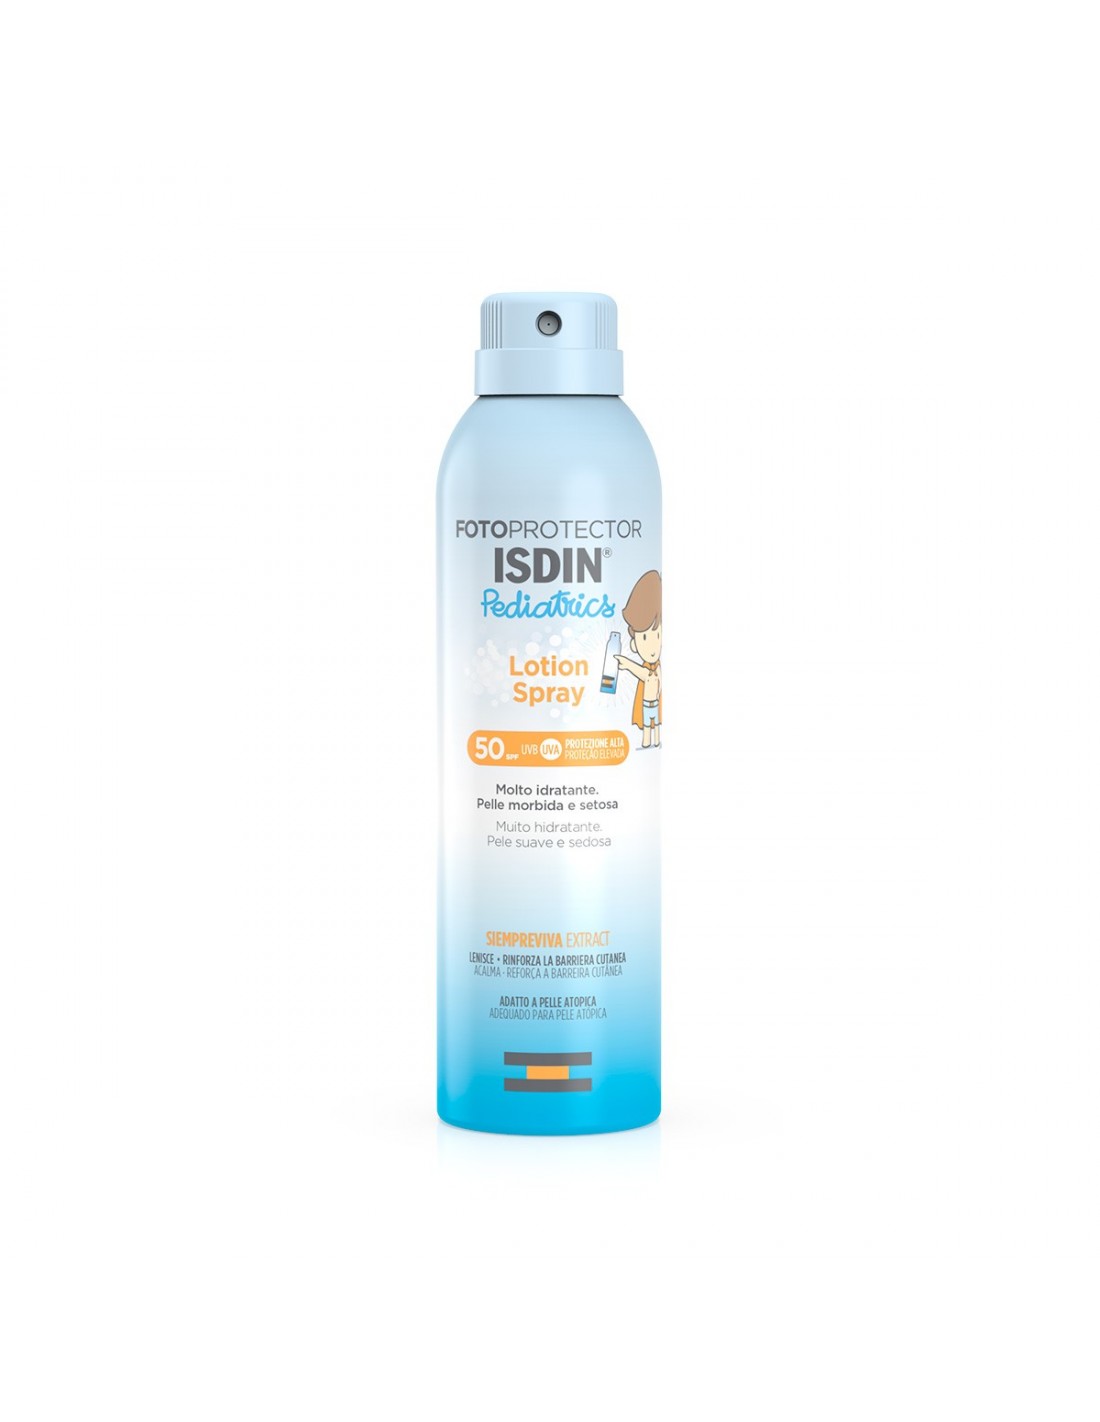 Isdin Fotoprotector Lotion Spray Pediatrics Spf50 250 ml